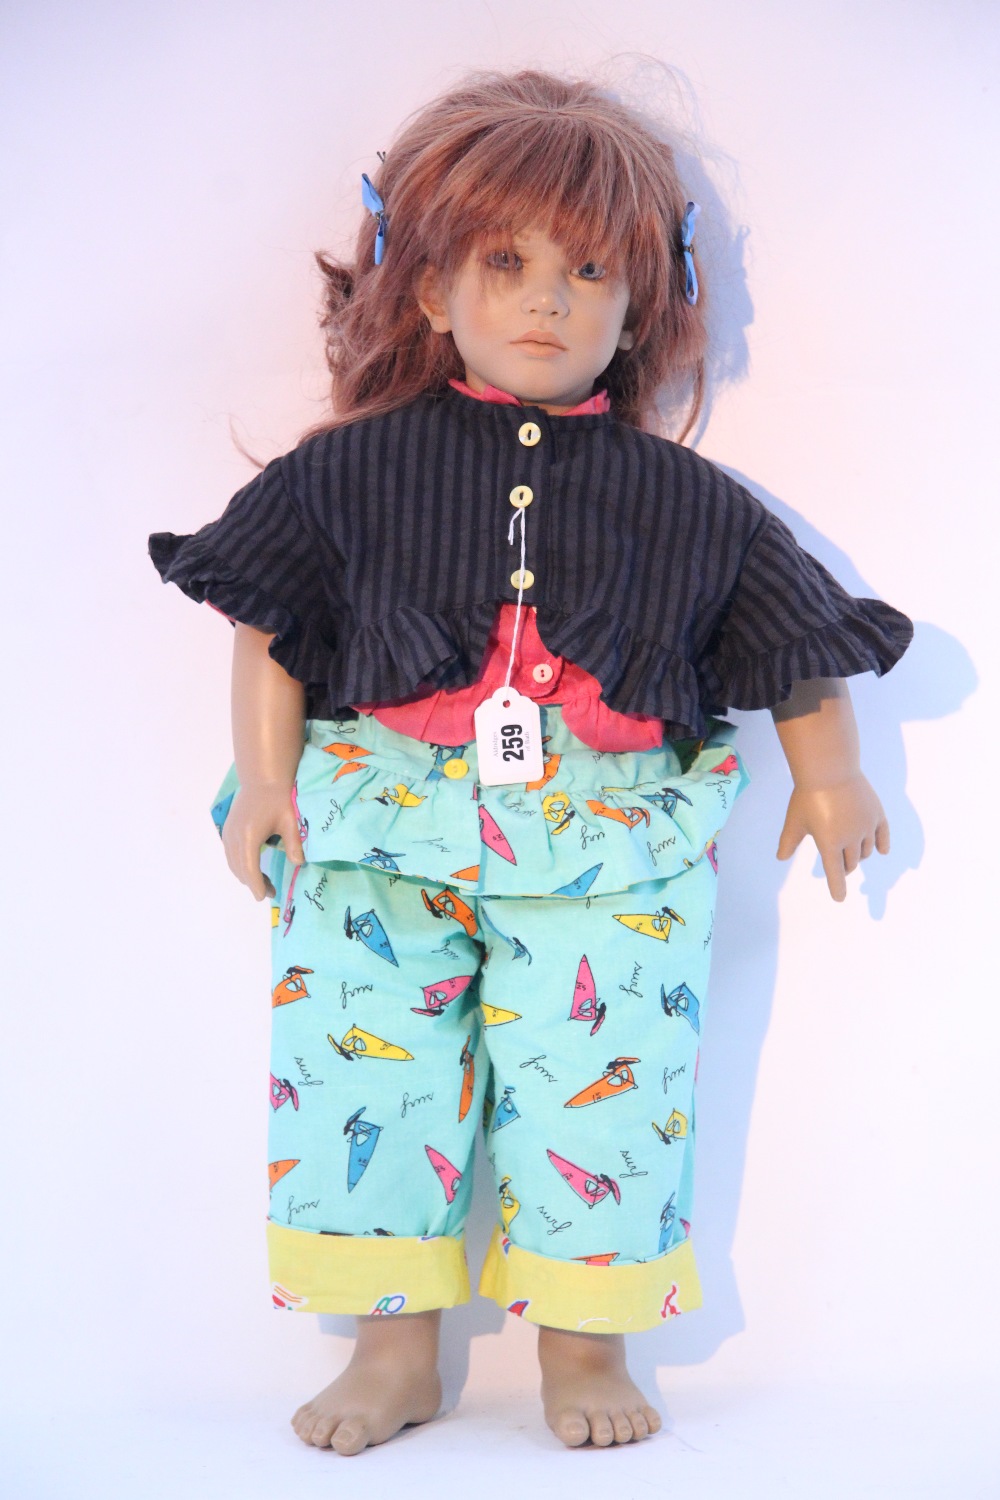 259. Another Annette Himstedt girl doll “Janka”, 26" tall, dressed.